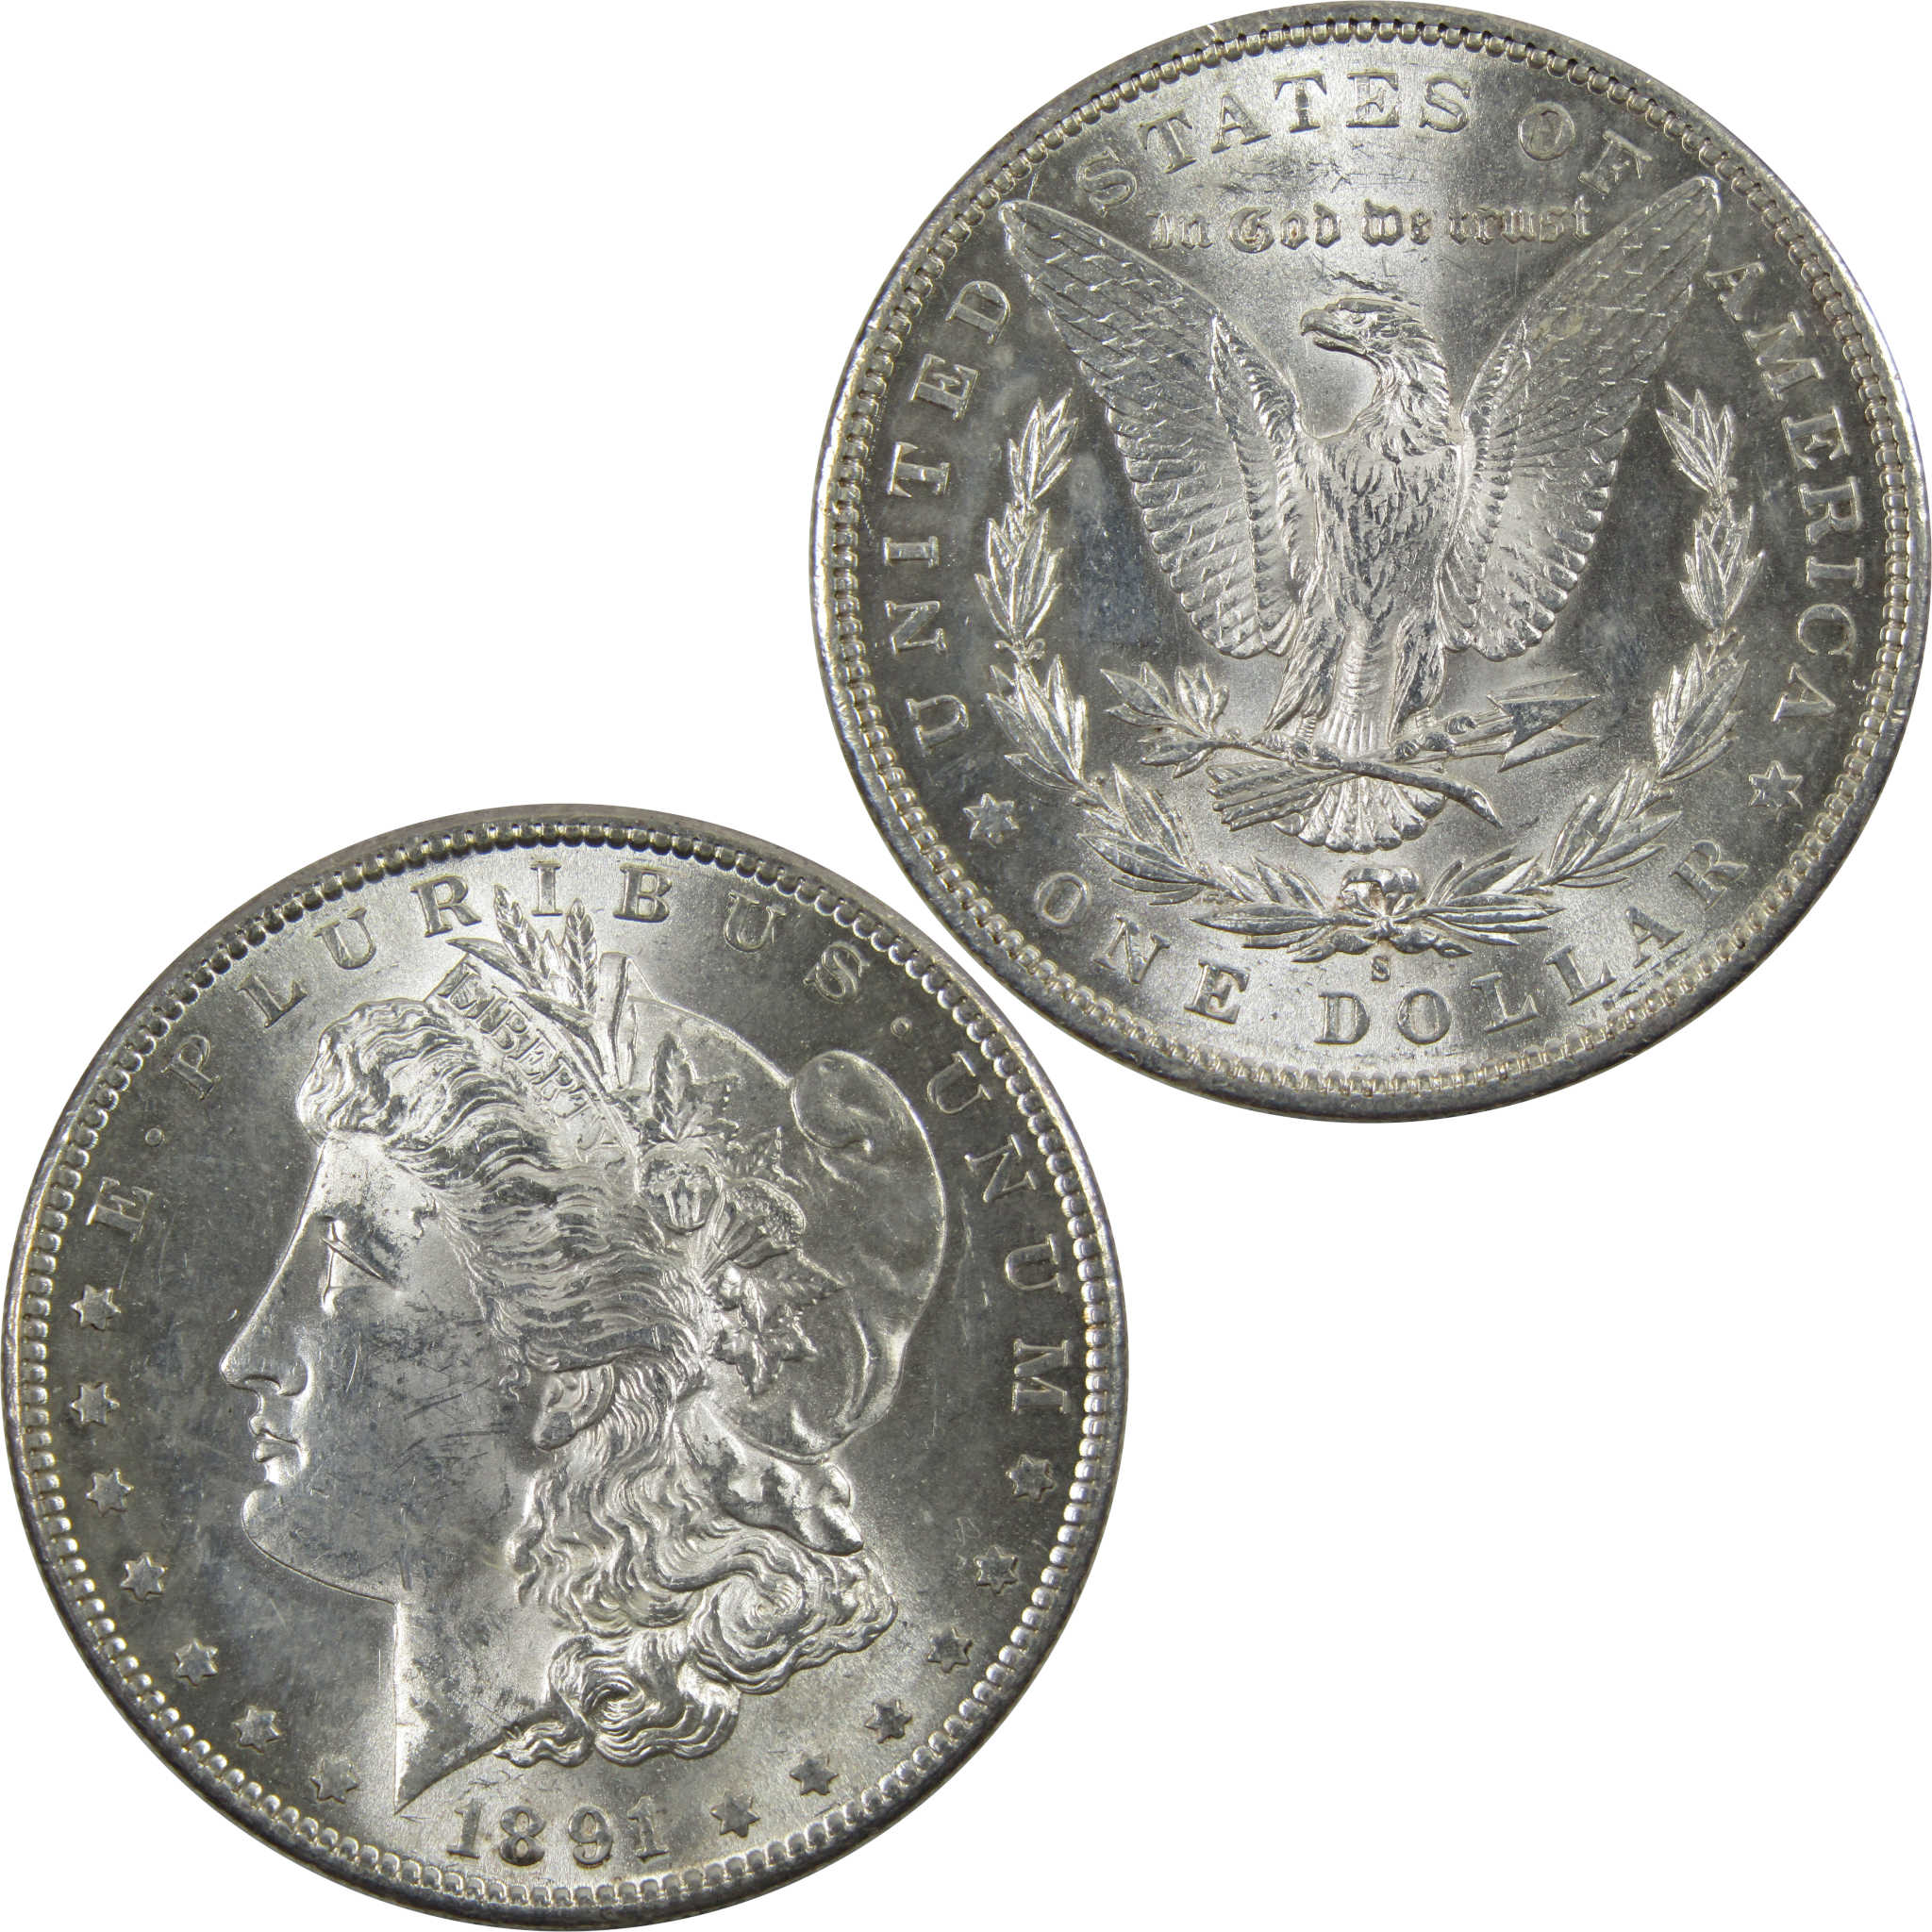 1891 S Morgan Dollar BU Uncirculated 90% Silver $1 Coin SKU:I5087 - Morgan coin - Morgan silver dollar - Morgan silver dollar for sale - Profile Coins &amp; Collectibles